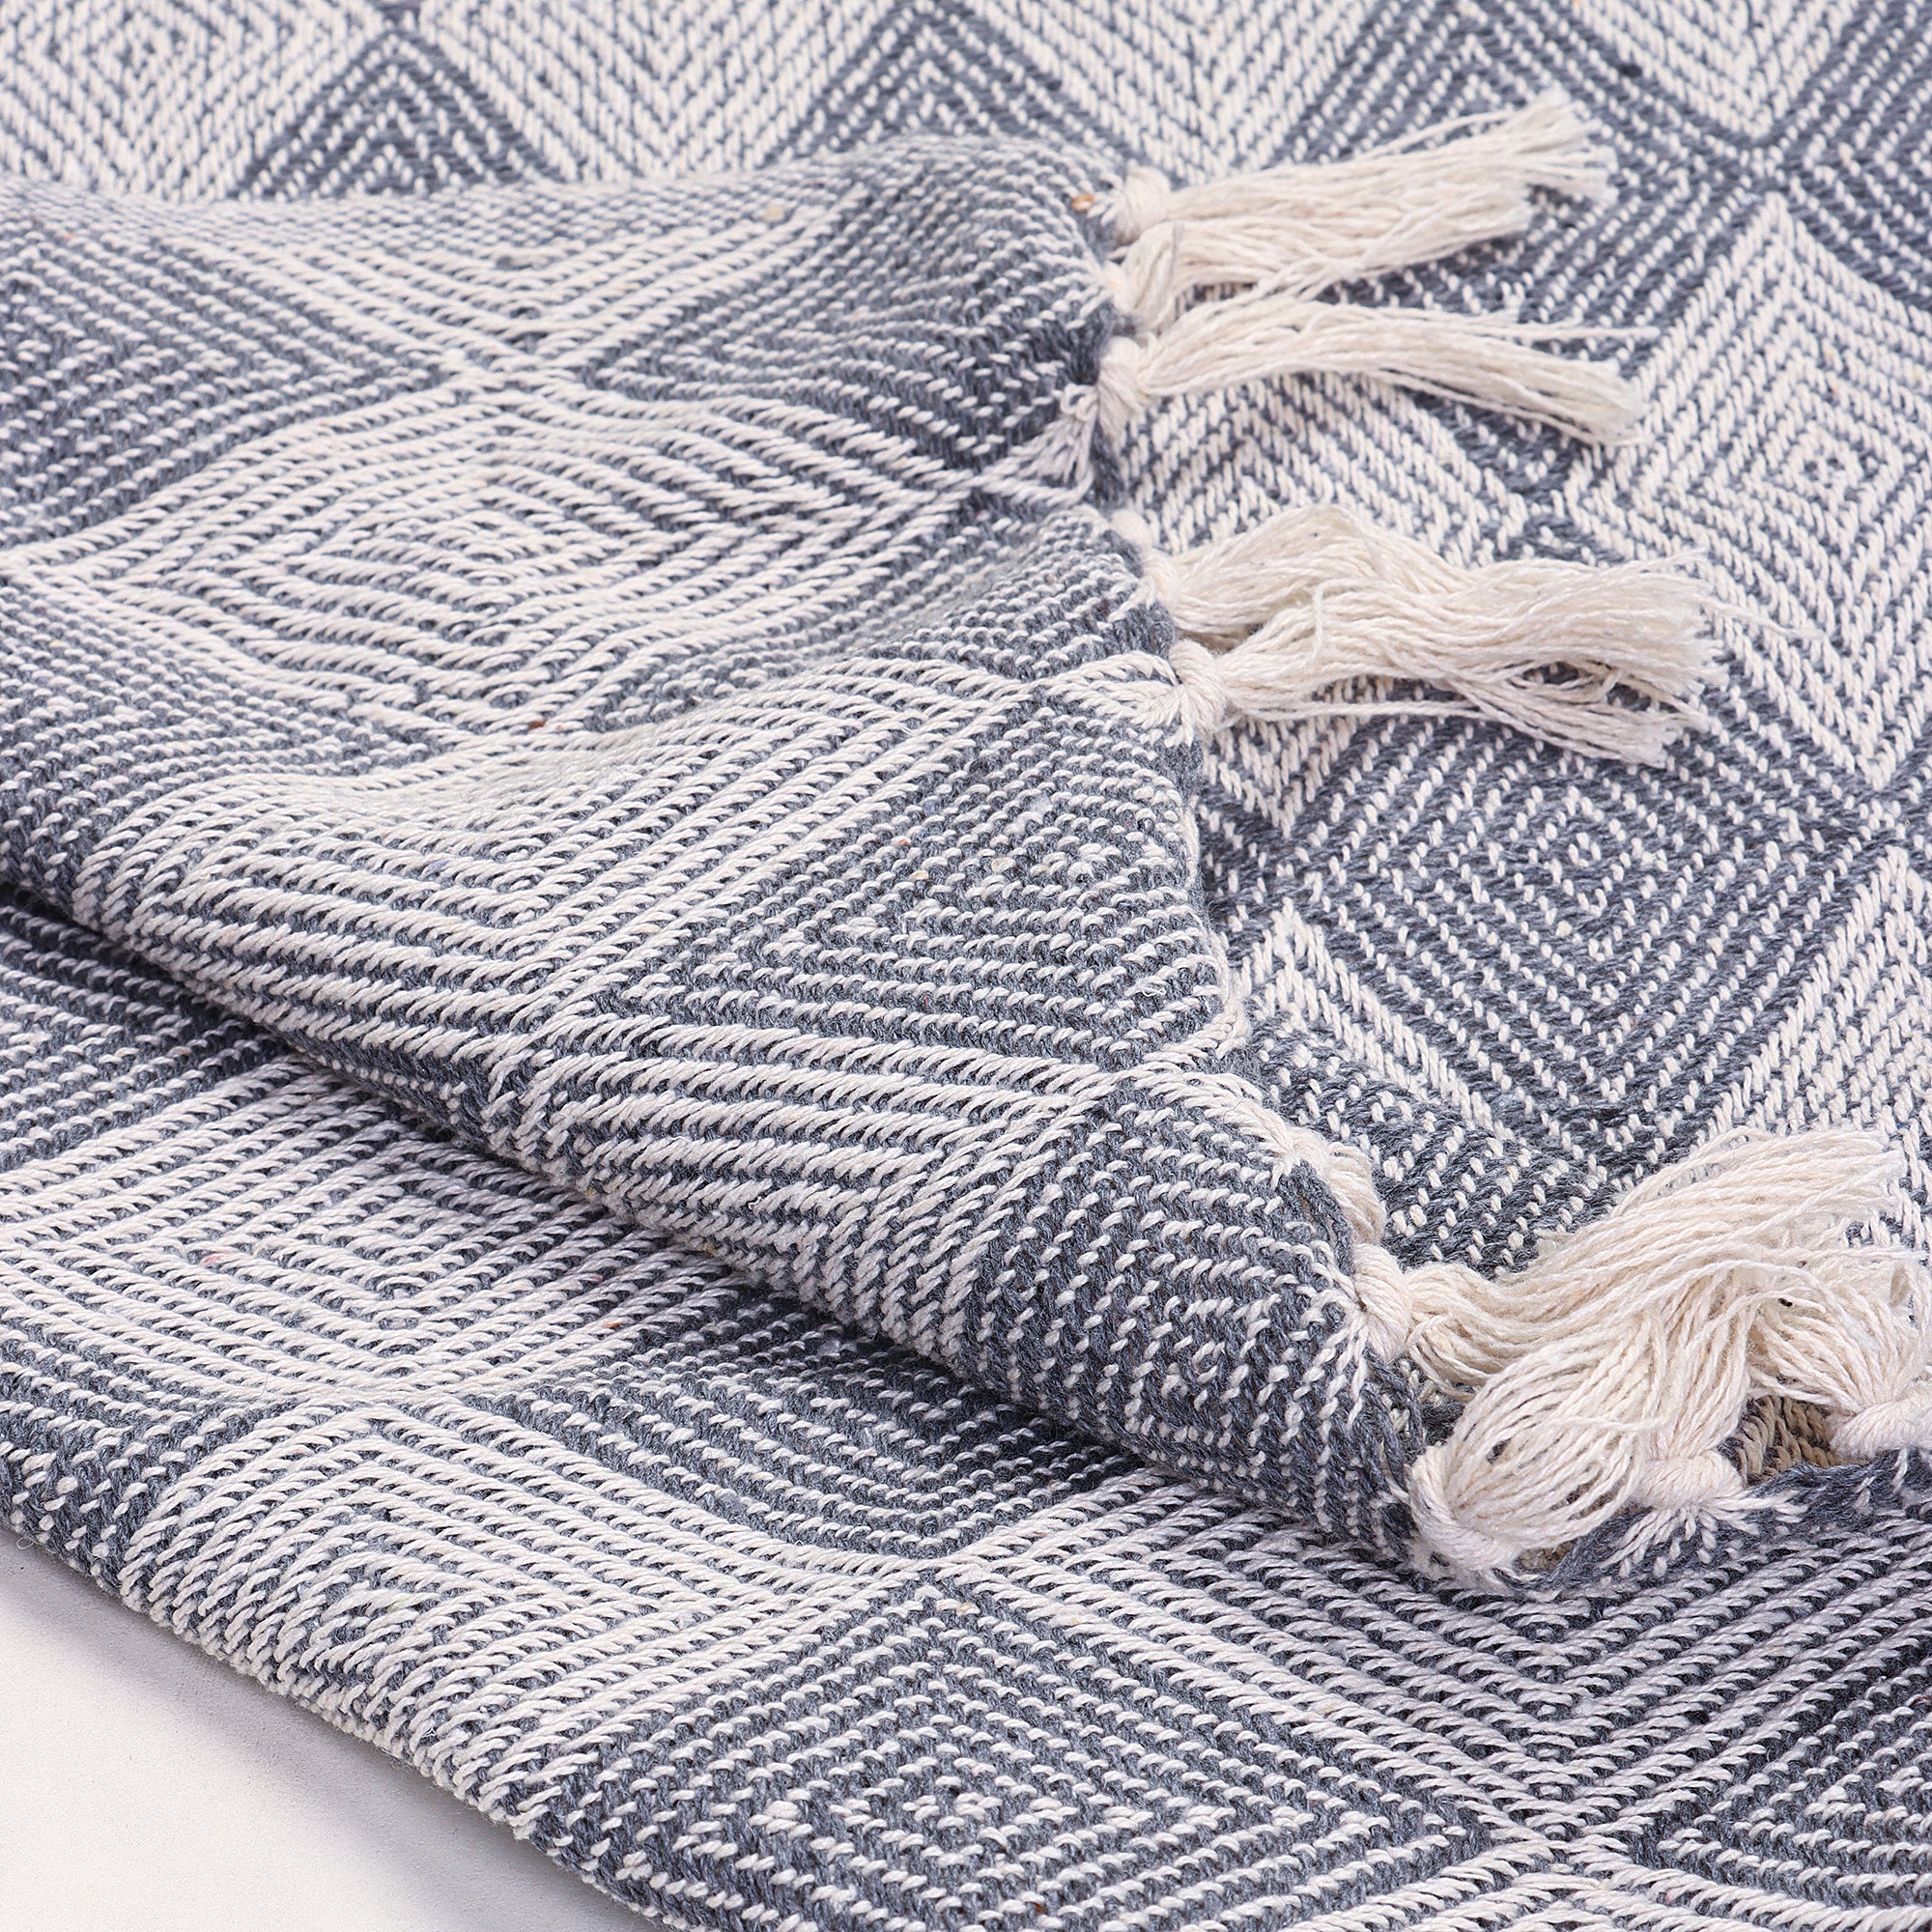 Grey Ikat Design Soft Throw For Sofa Online